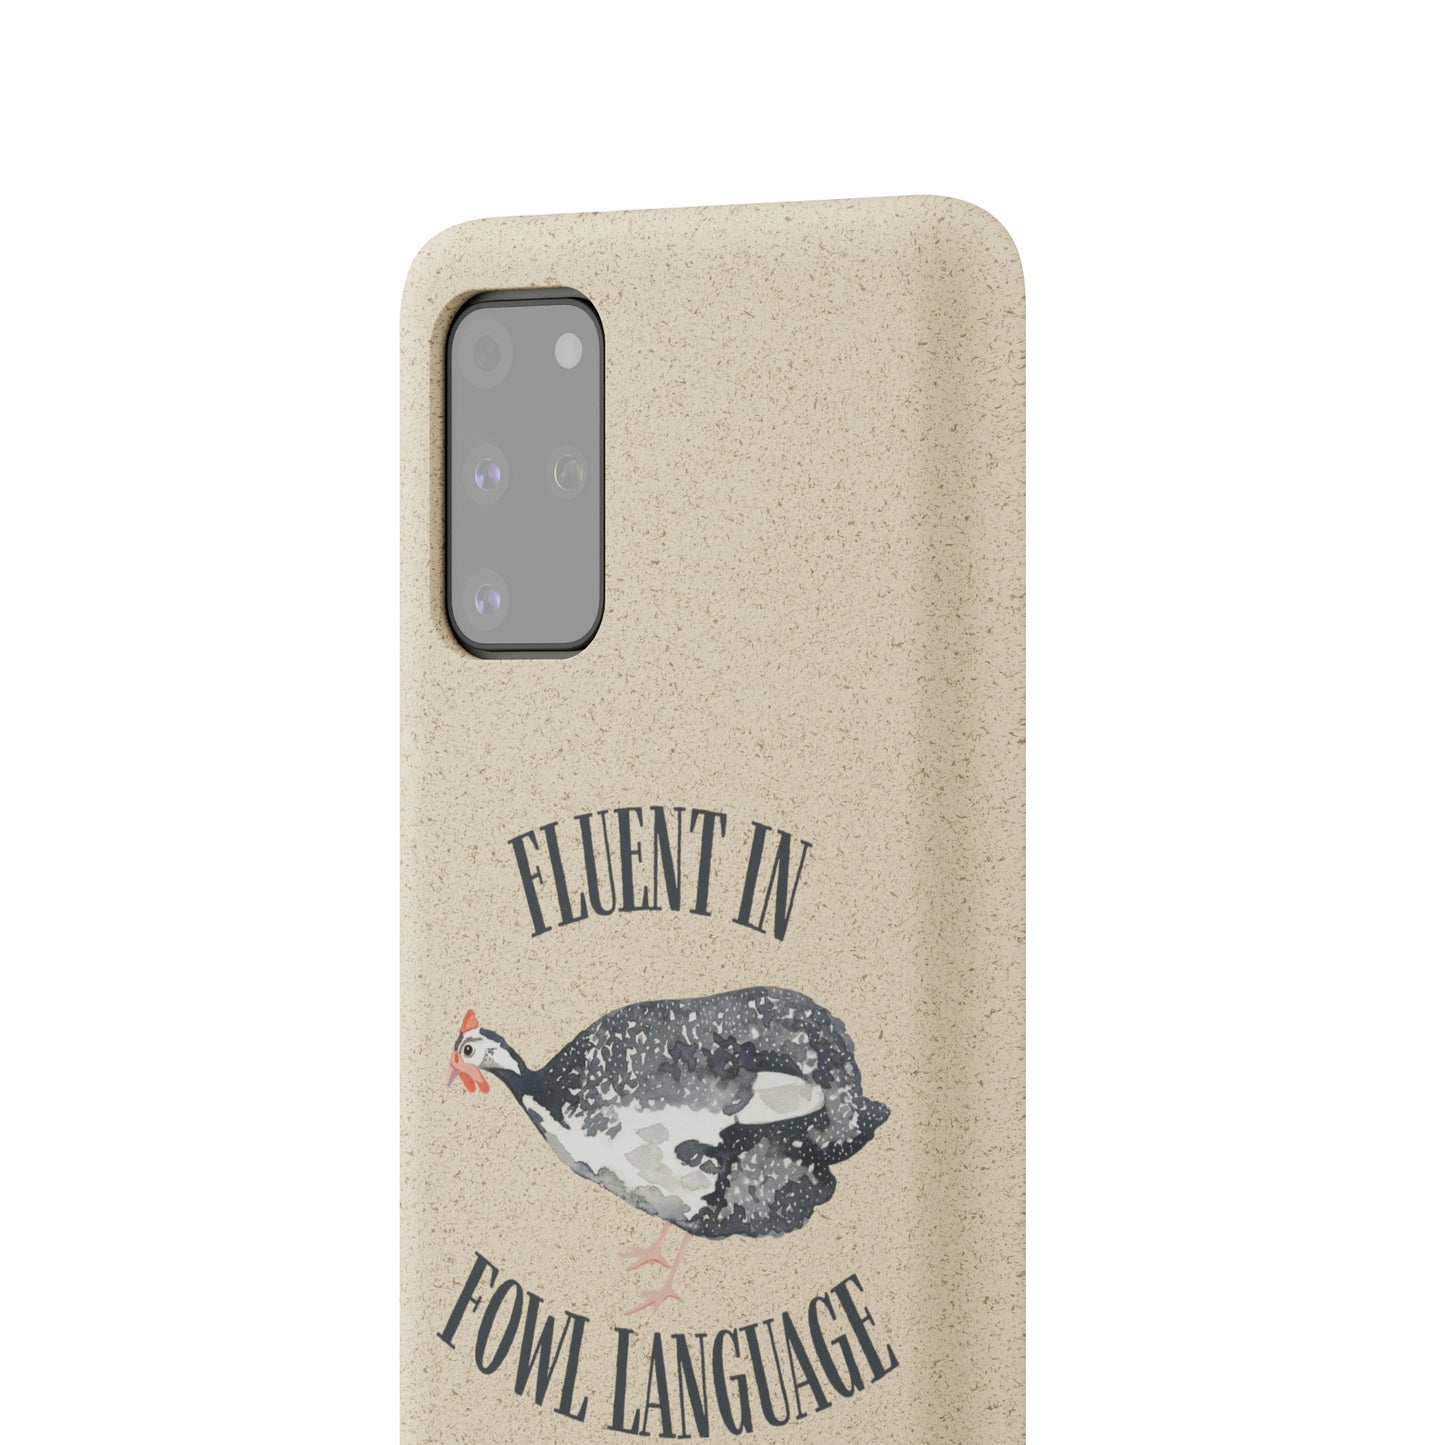 Fowl Language Phone Case